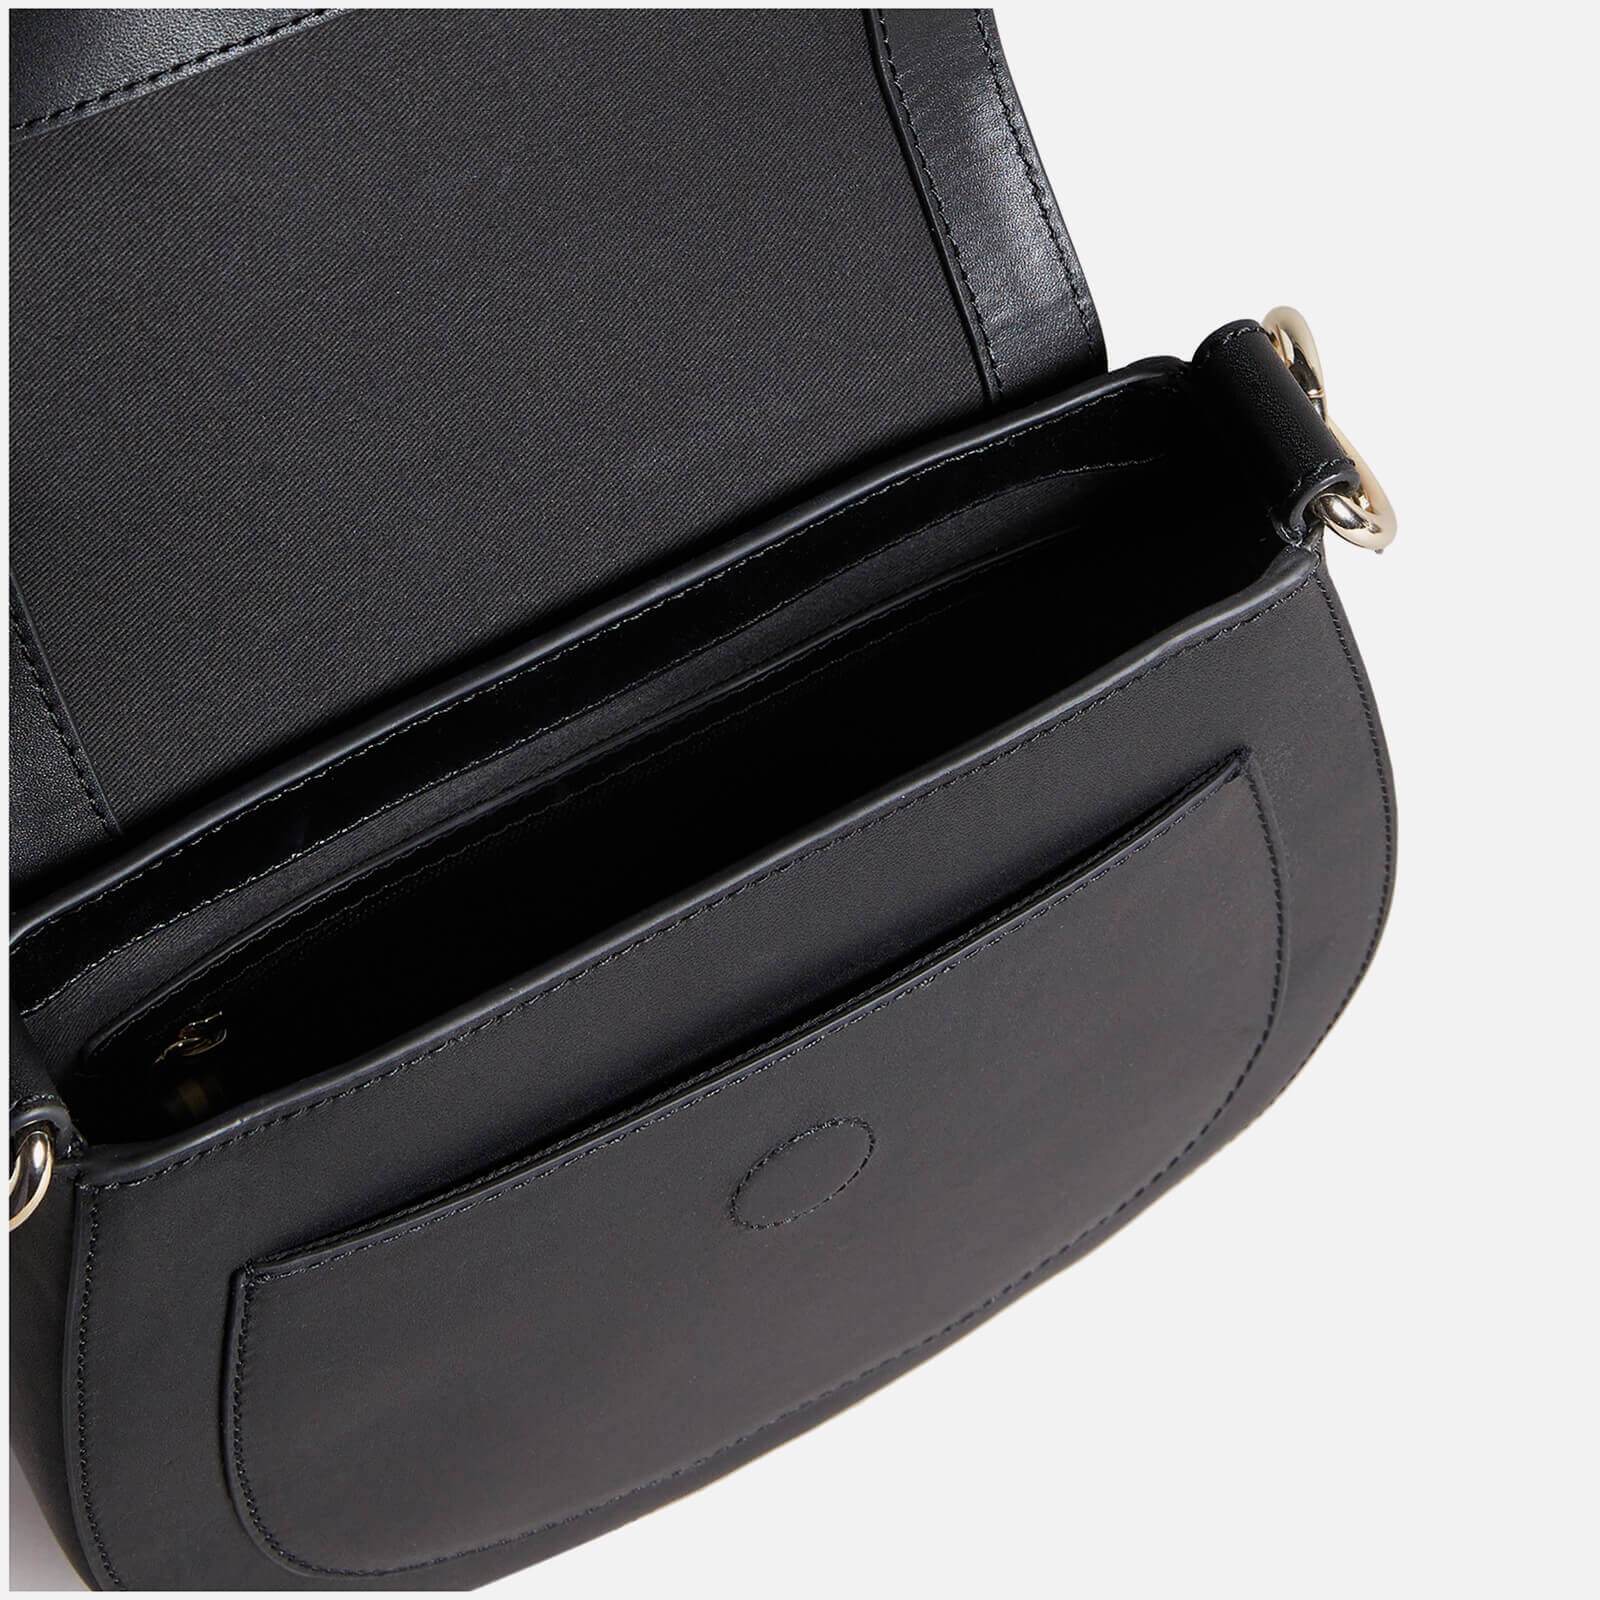 ted baker darcell branded satchel crossbody bag - black